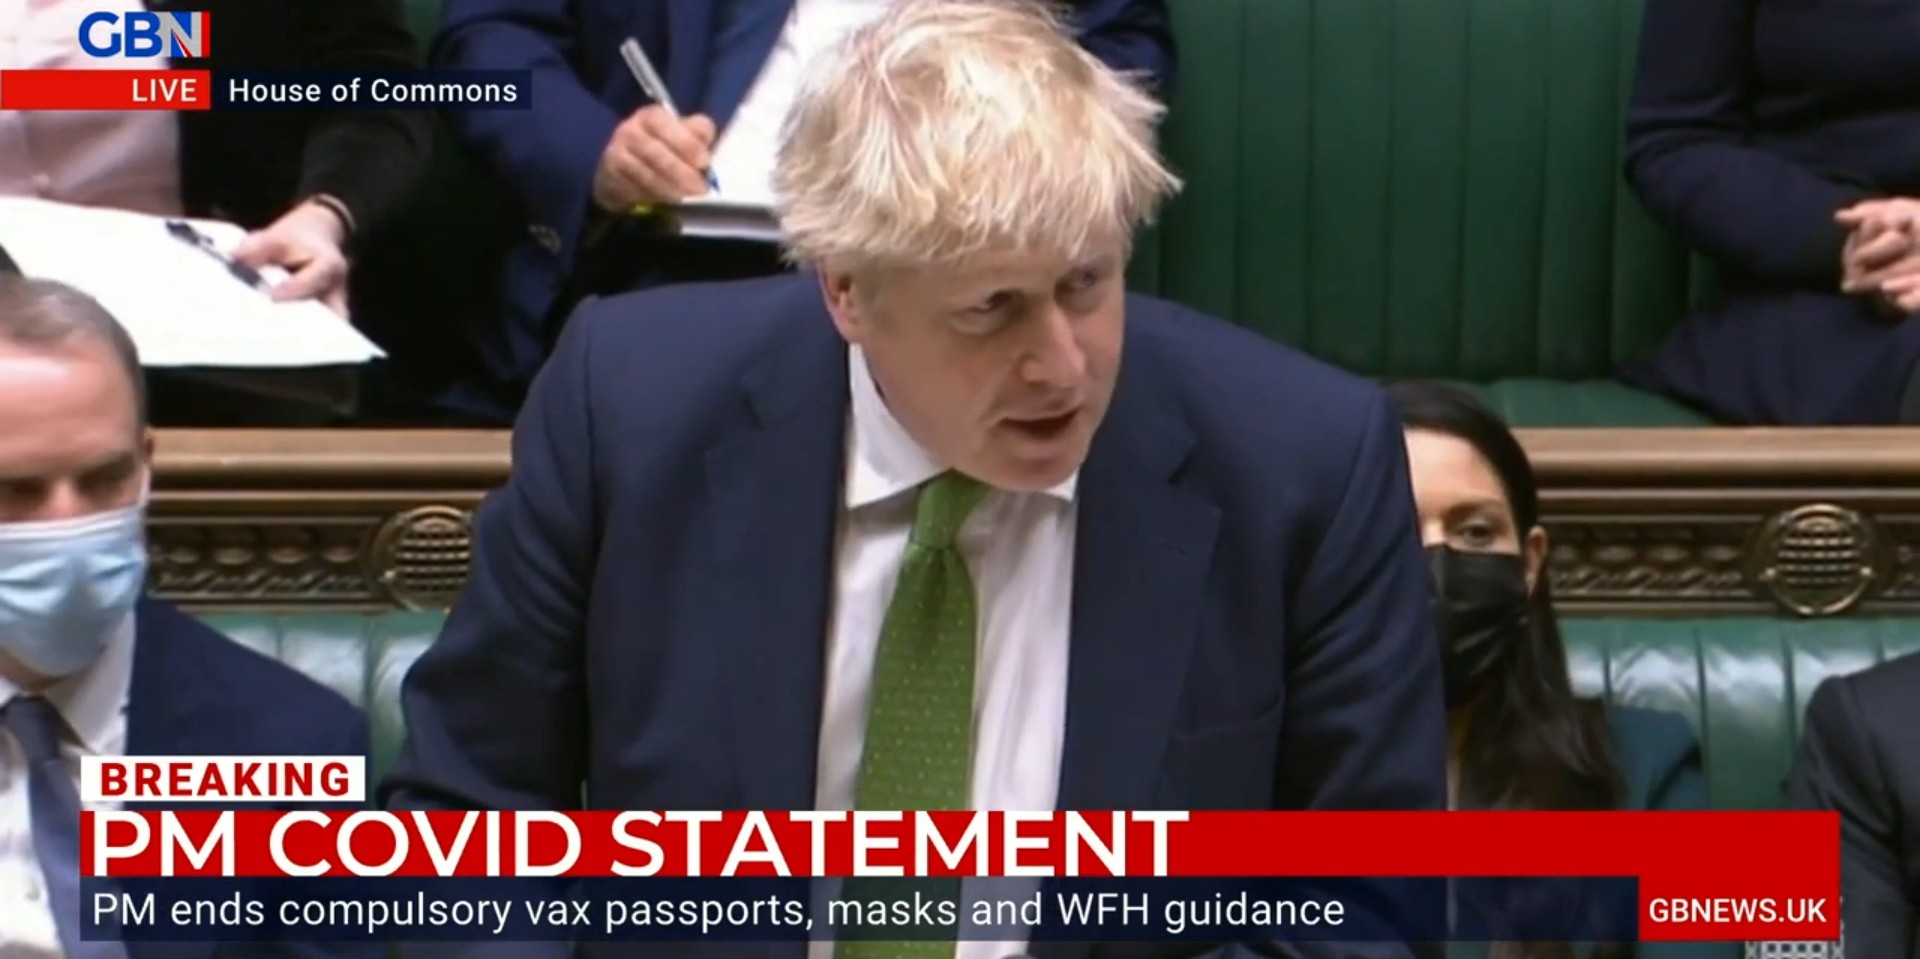 Boris Johnson ends England's COVID restrictions